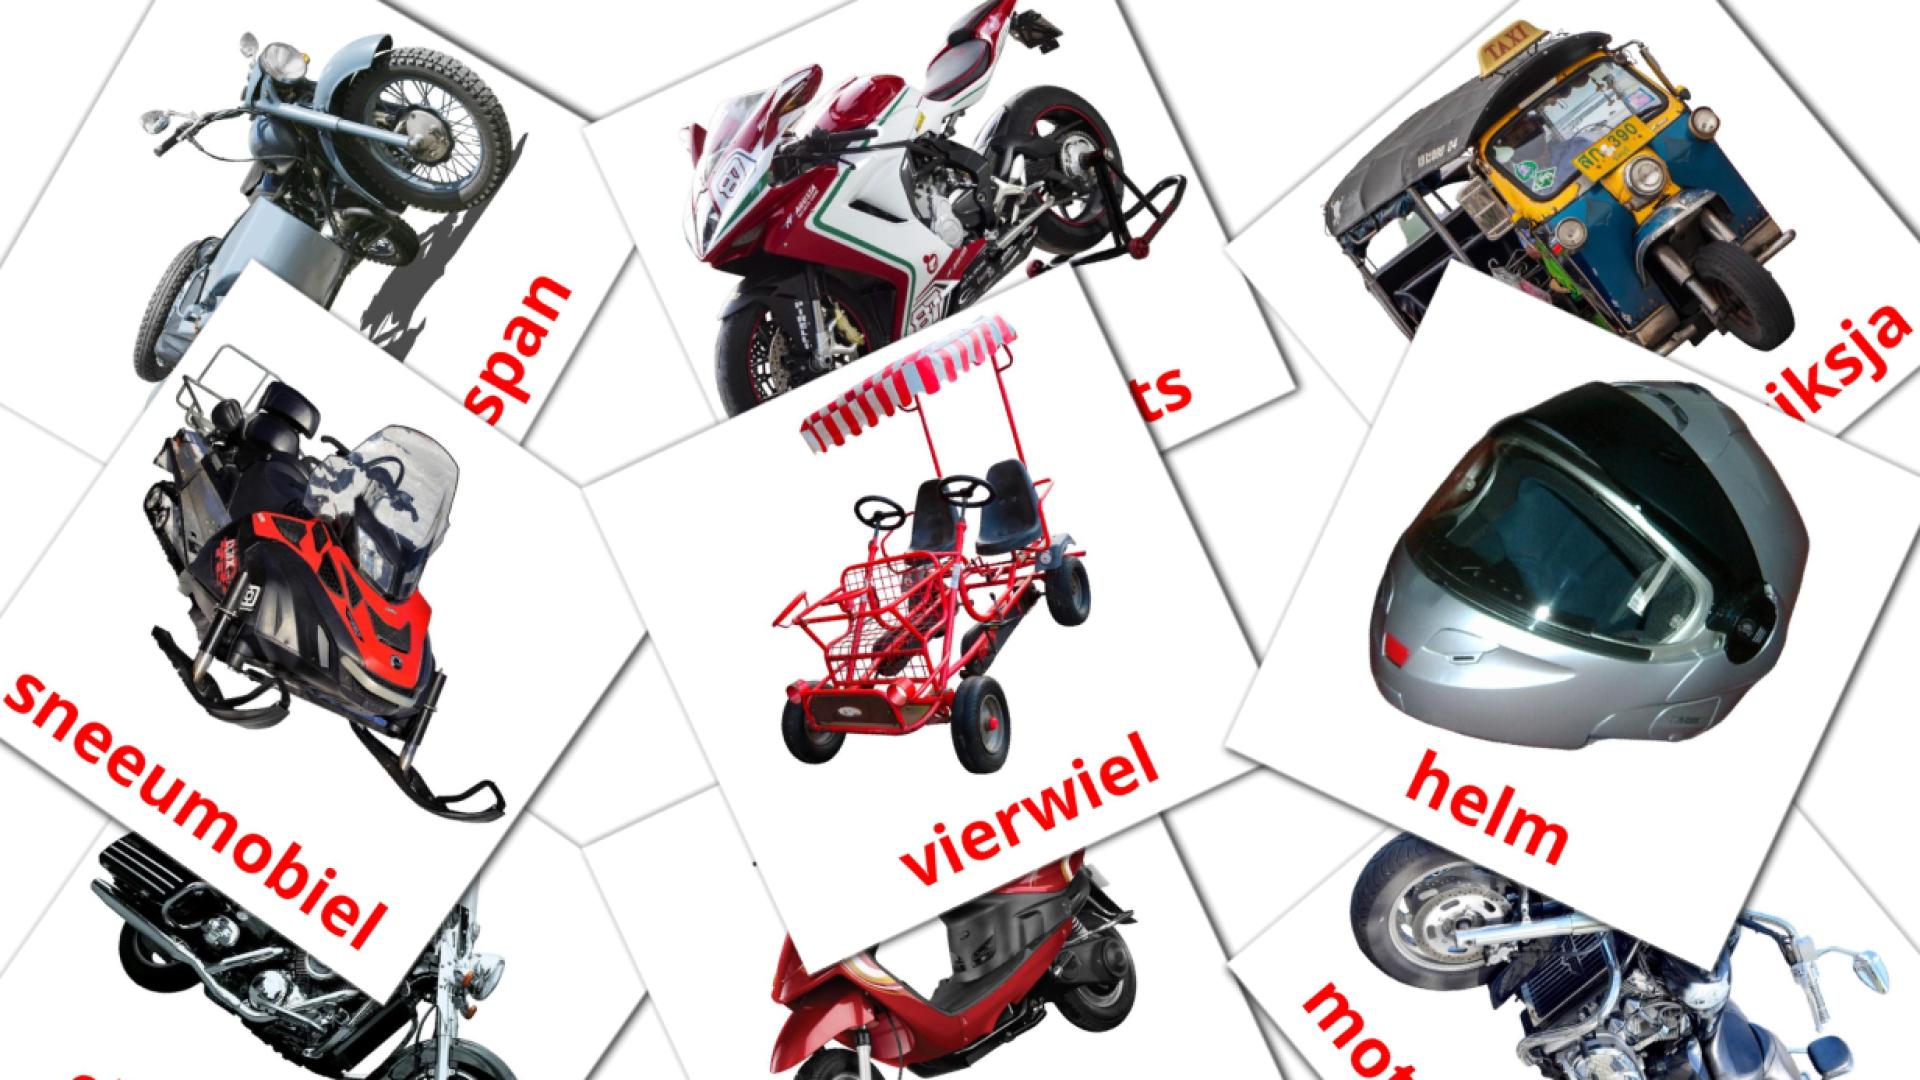 Motorräder - Afrikaans Vokabelkarten